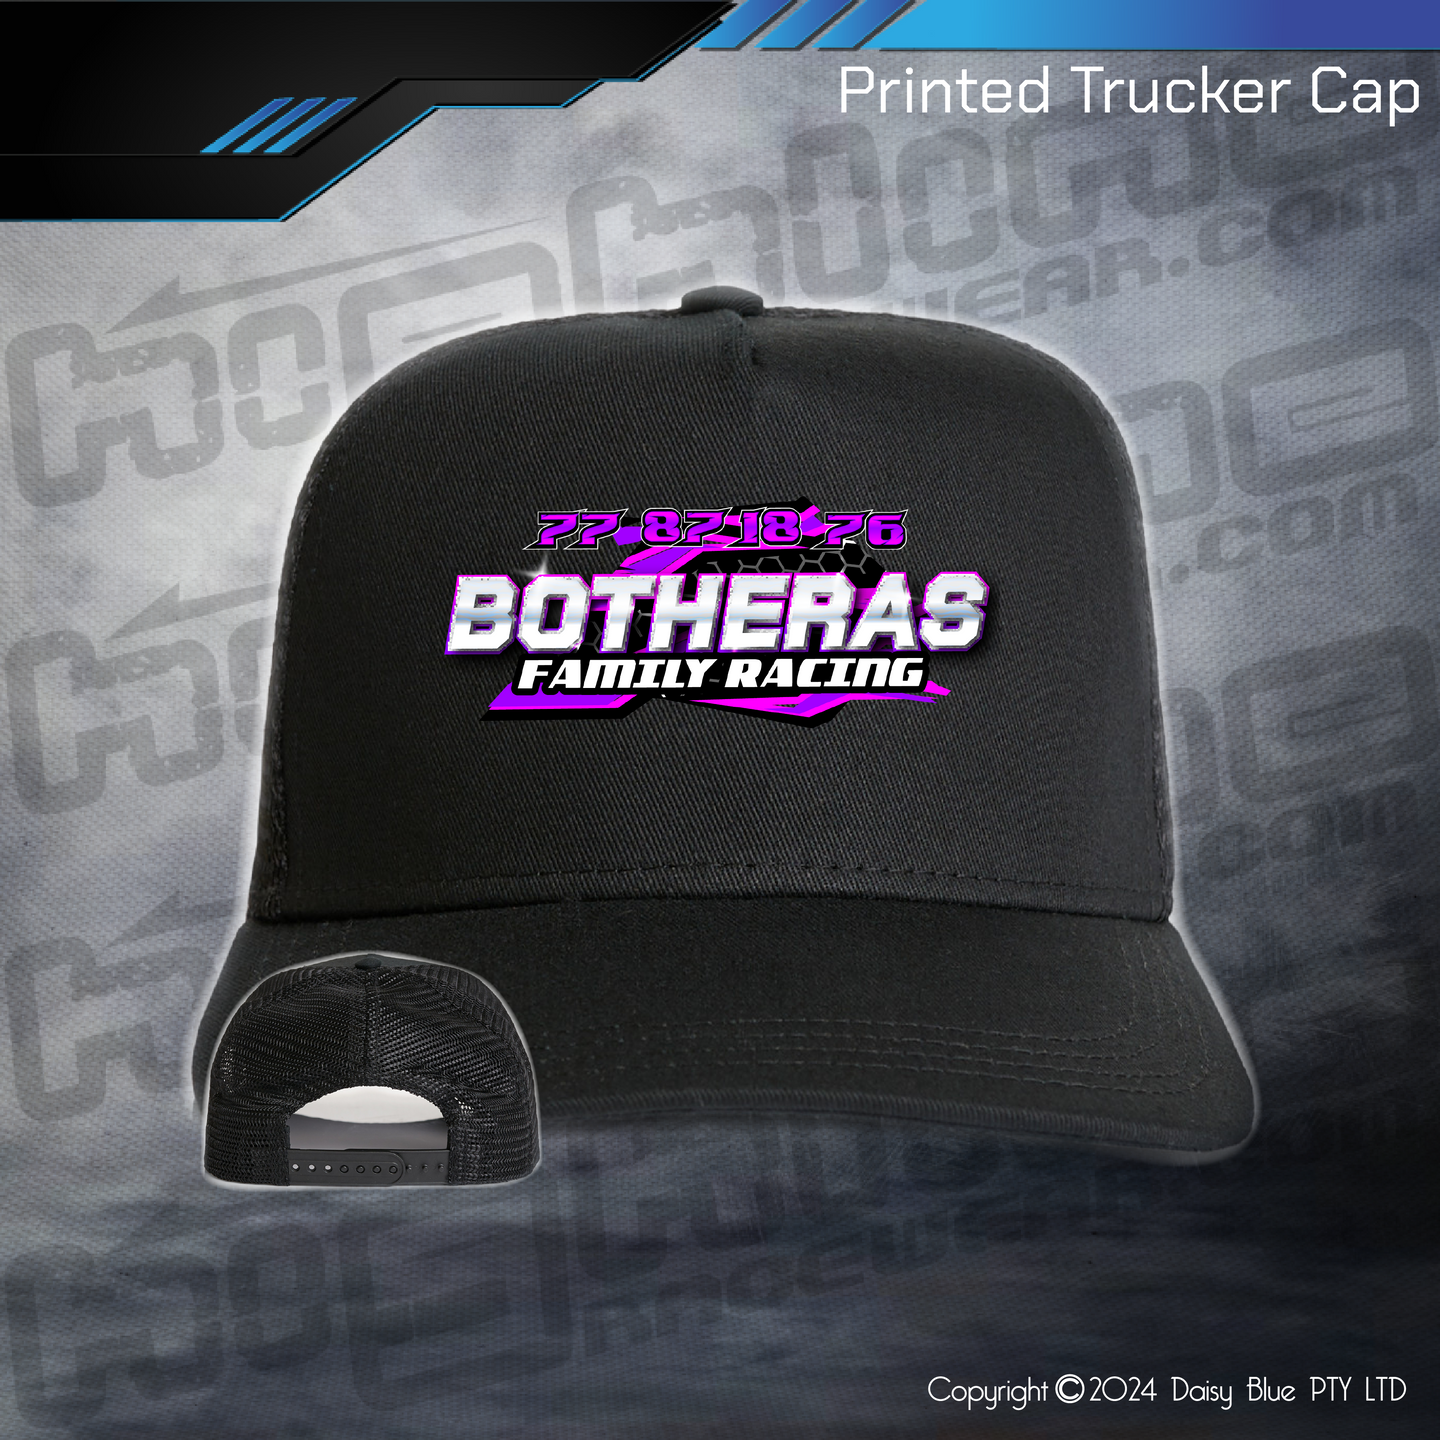 Printed Trucker Cap - Botheras Family Racing